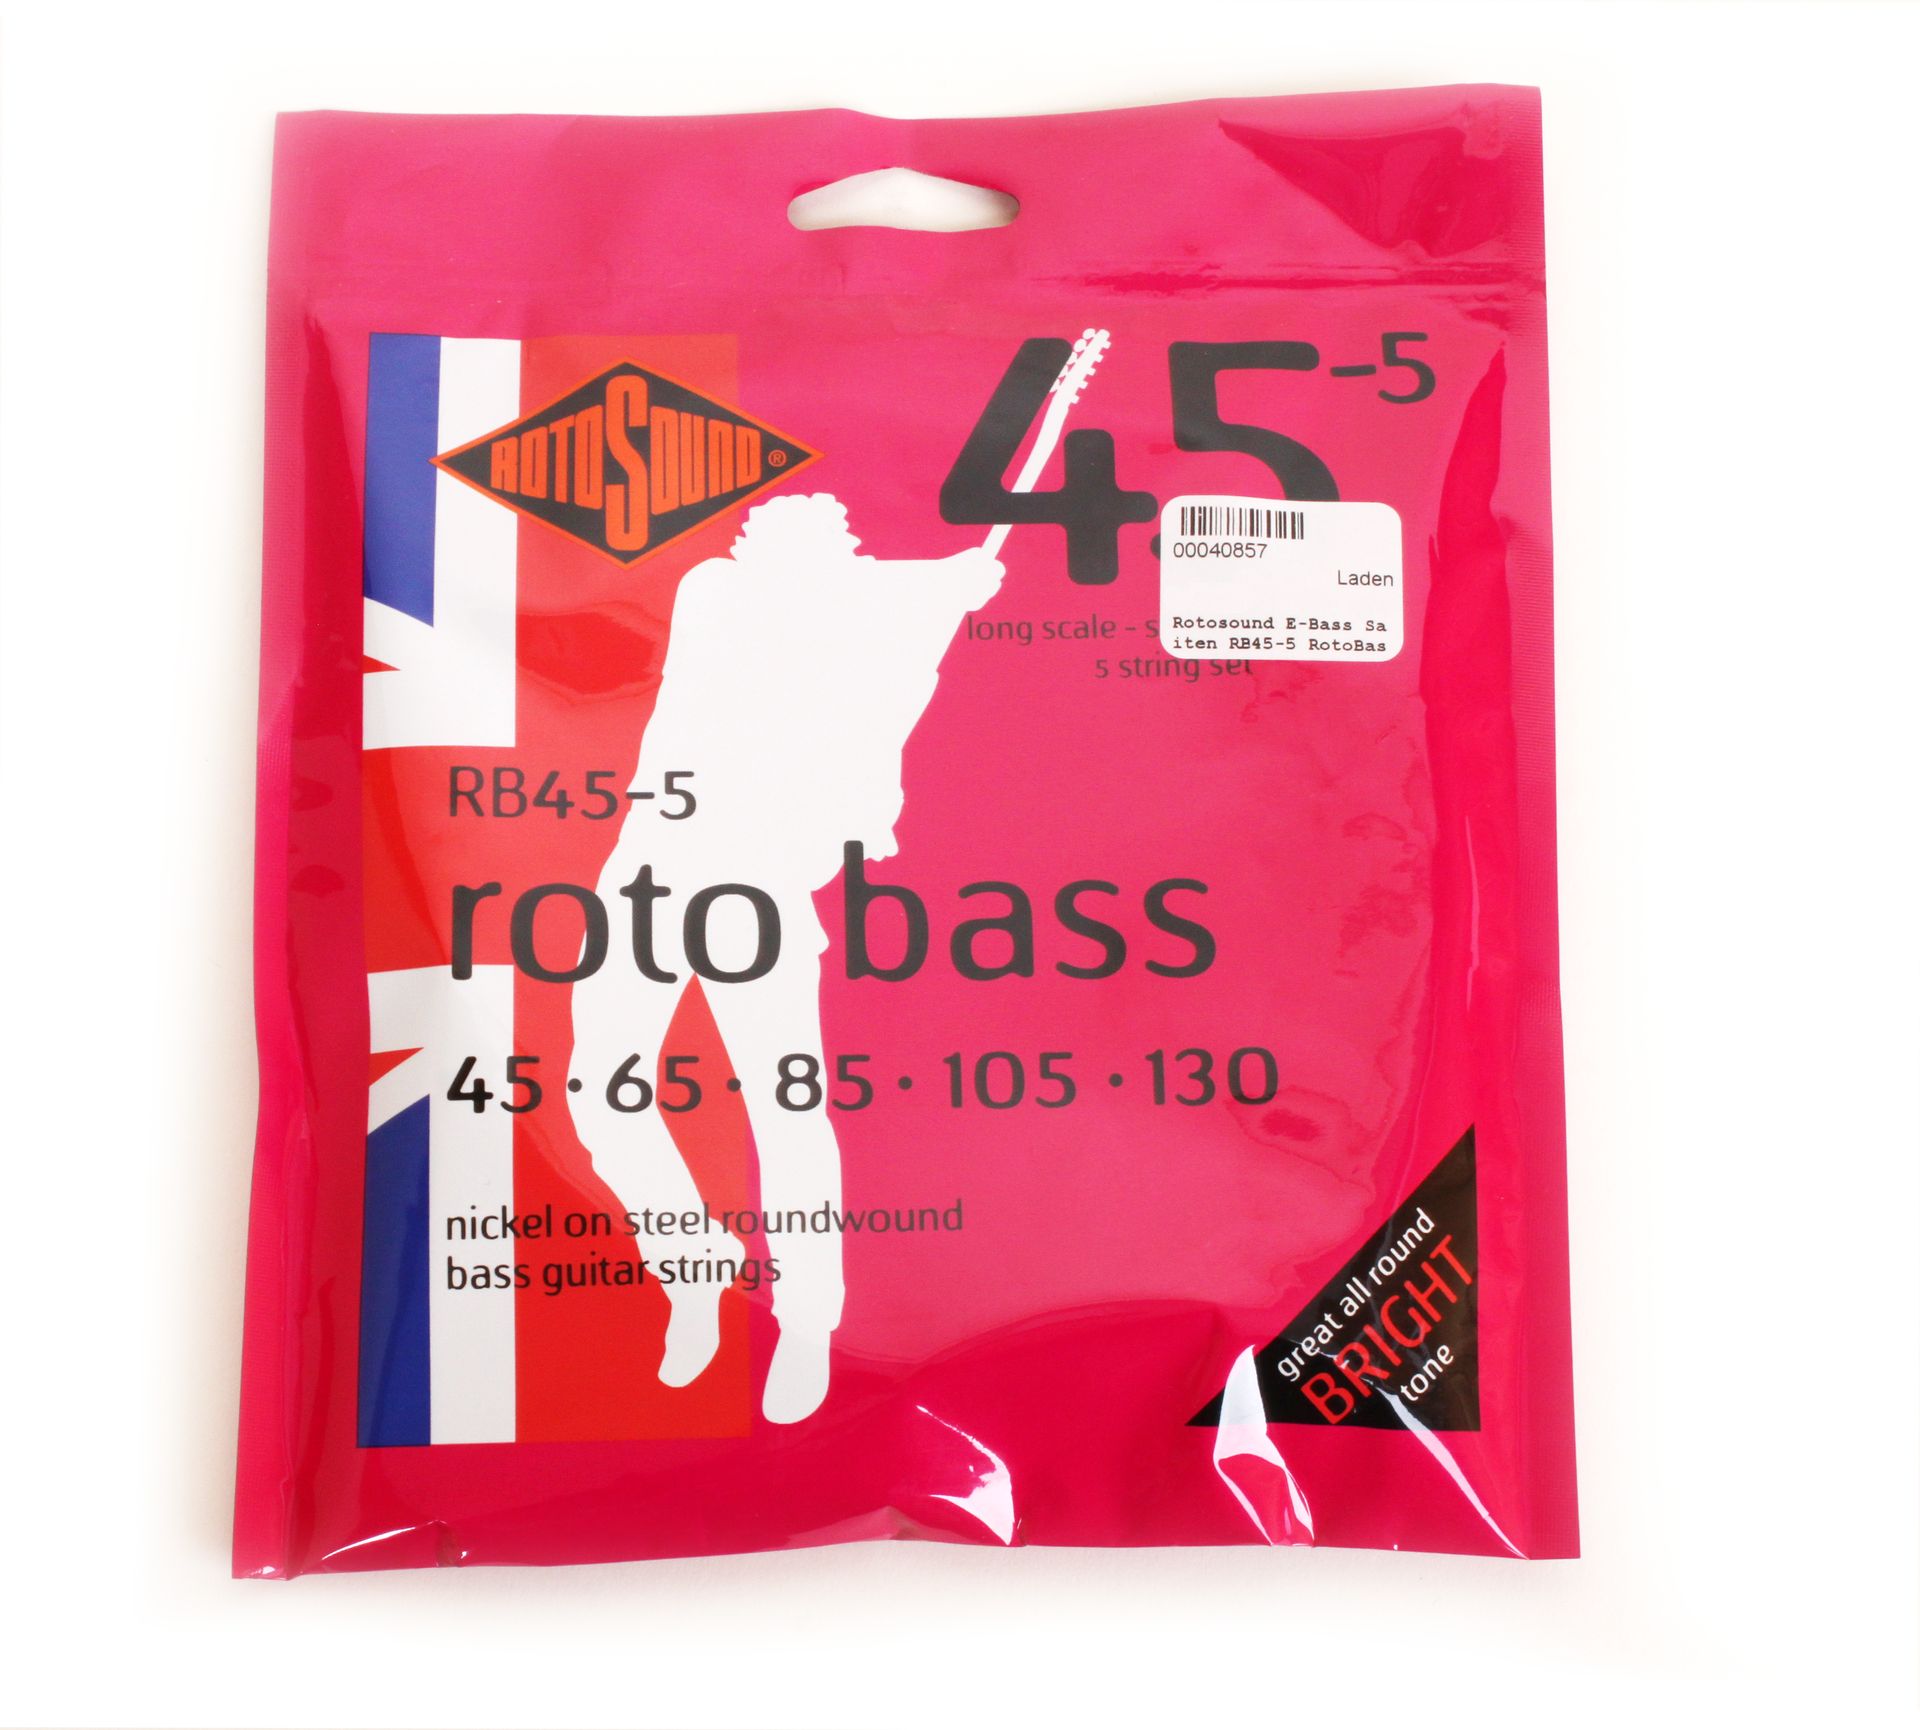 Rotosound E-Bass Saiten RB45-5 RotoBass 